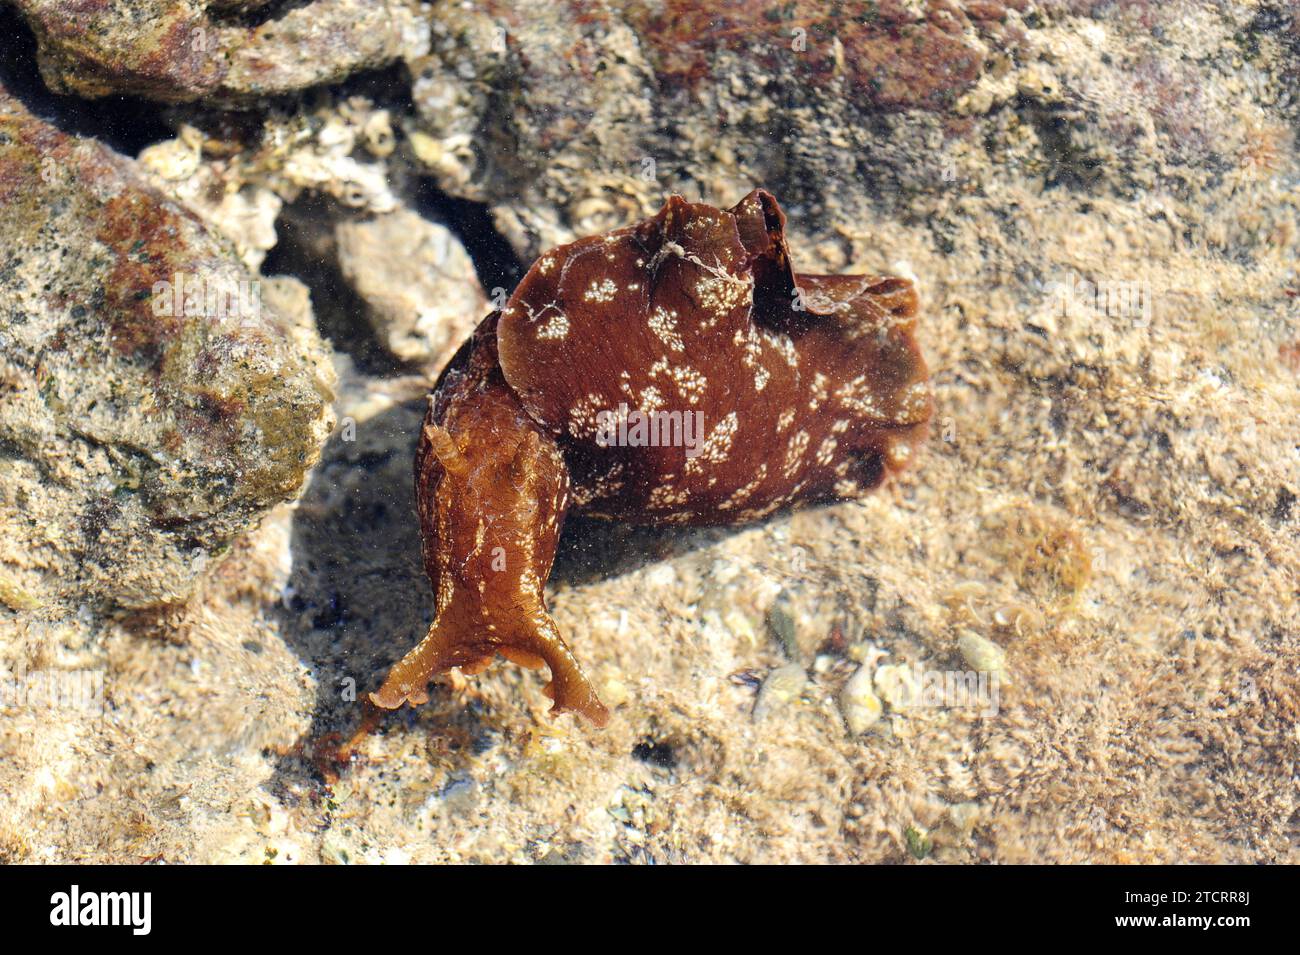 Sea slug or sea hare (Aplysia punctata) is a marine mollusk. This photo was taken in Cap Ras, Girona province, Catalonia, Spain. Stock Photo